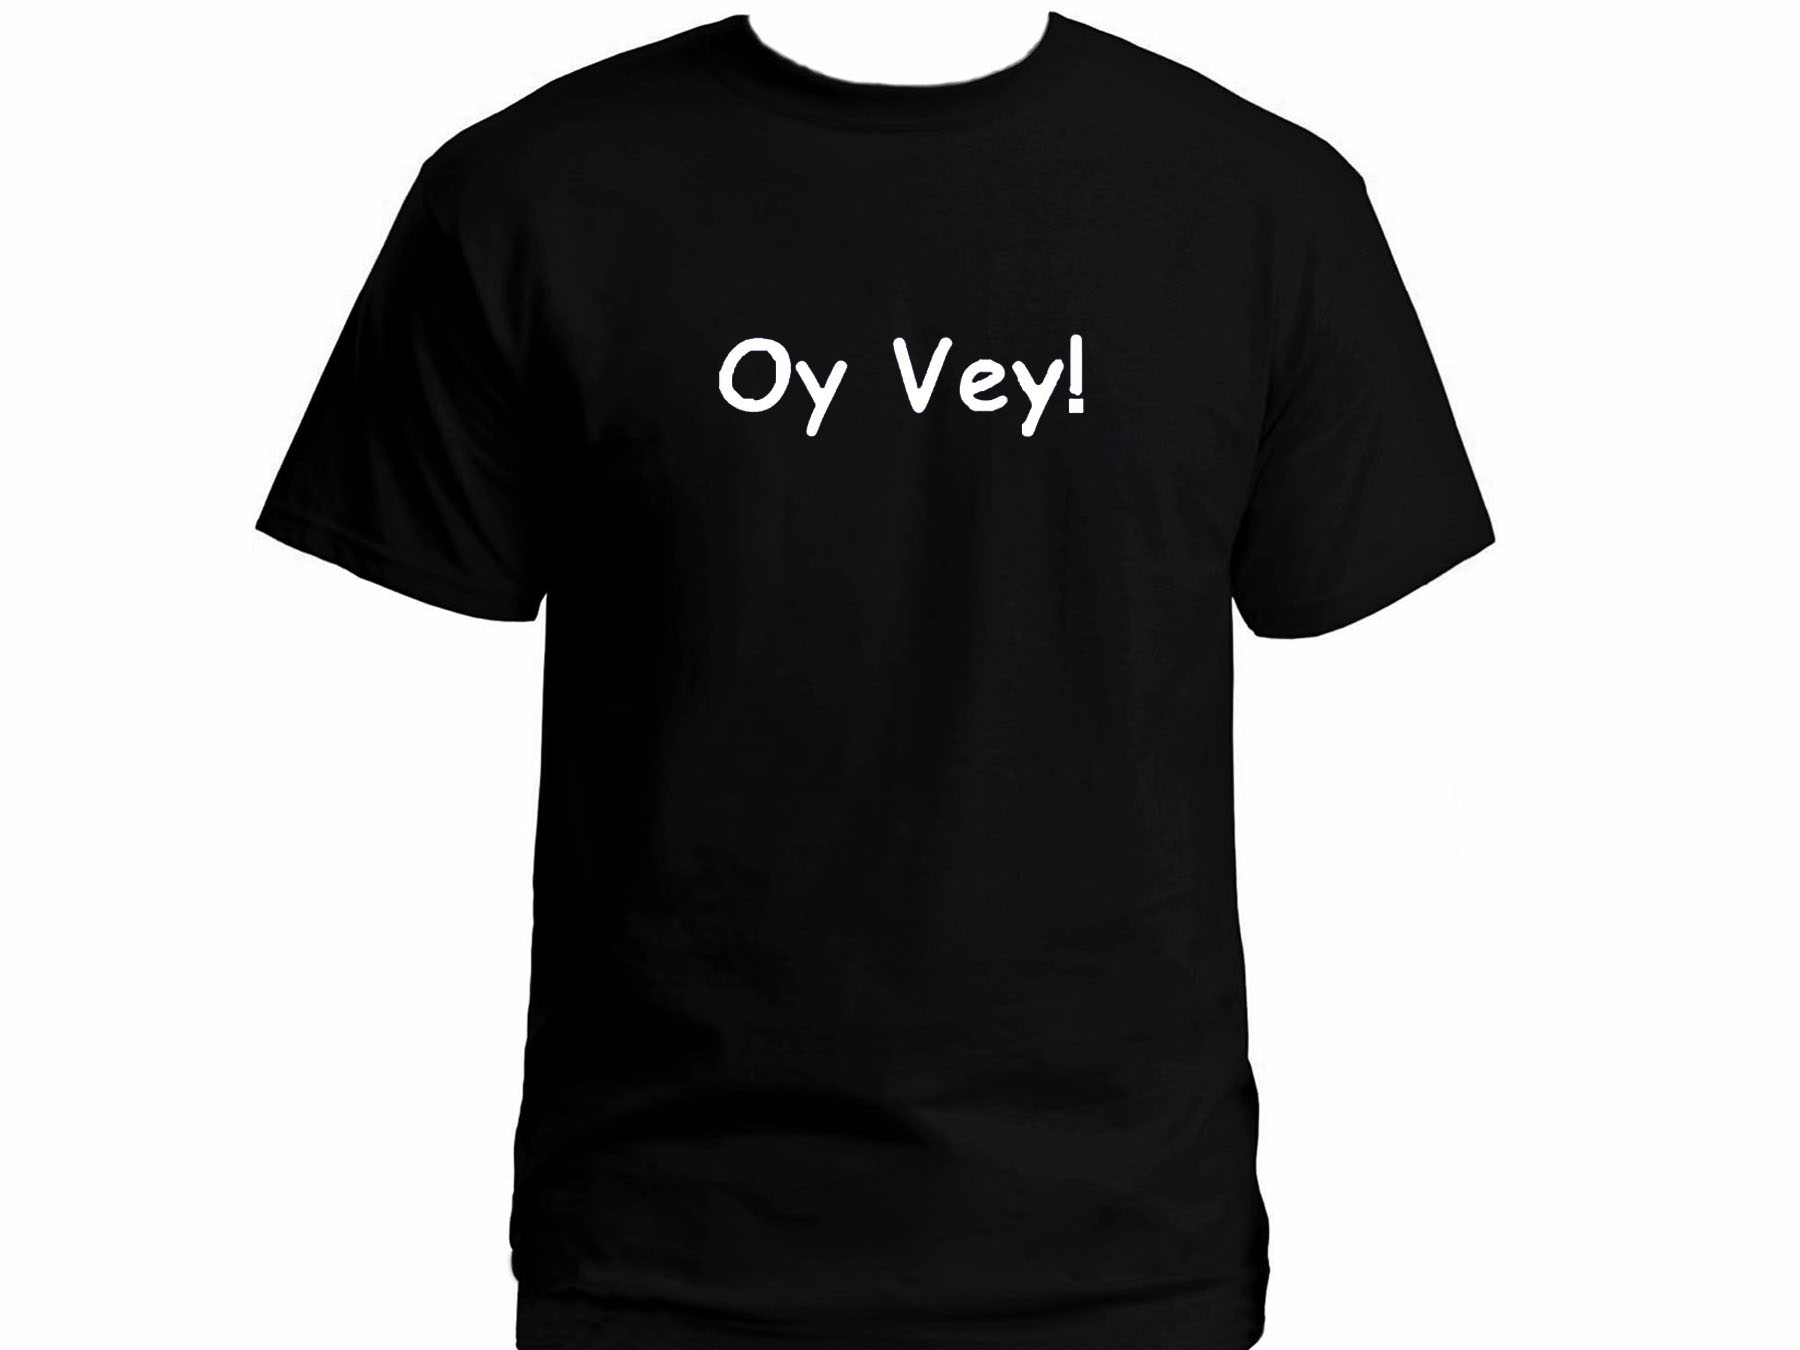 Oy vey funny Jewish t-shirt